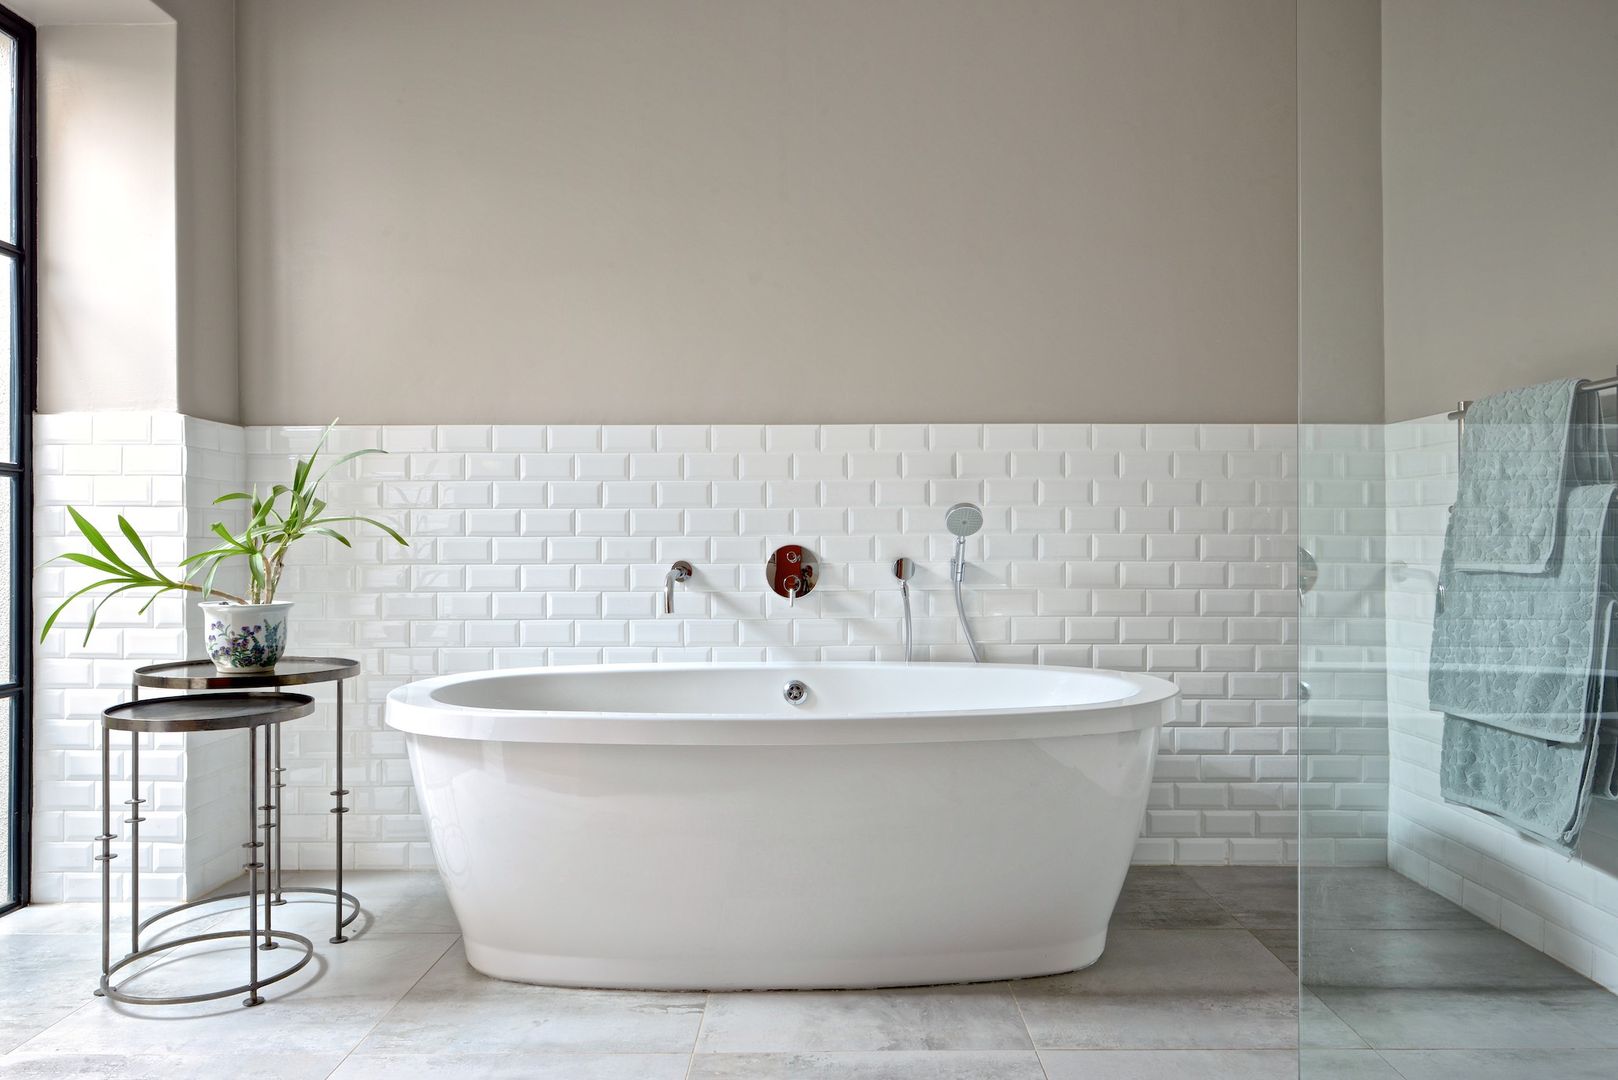 Freestanding bath Oksijen Modern bathroom freestanding bathtub,acrylic bath,metro tiles,white metro tiles,grey floor tiles,grey wall